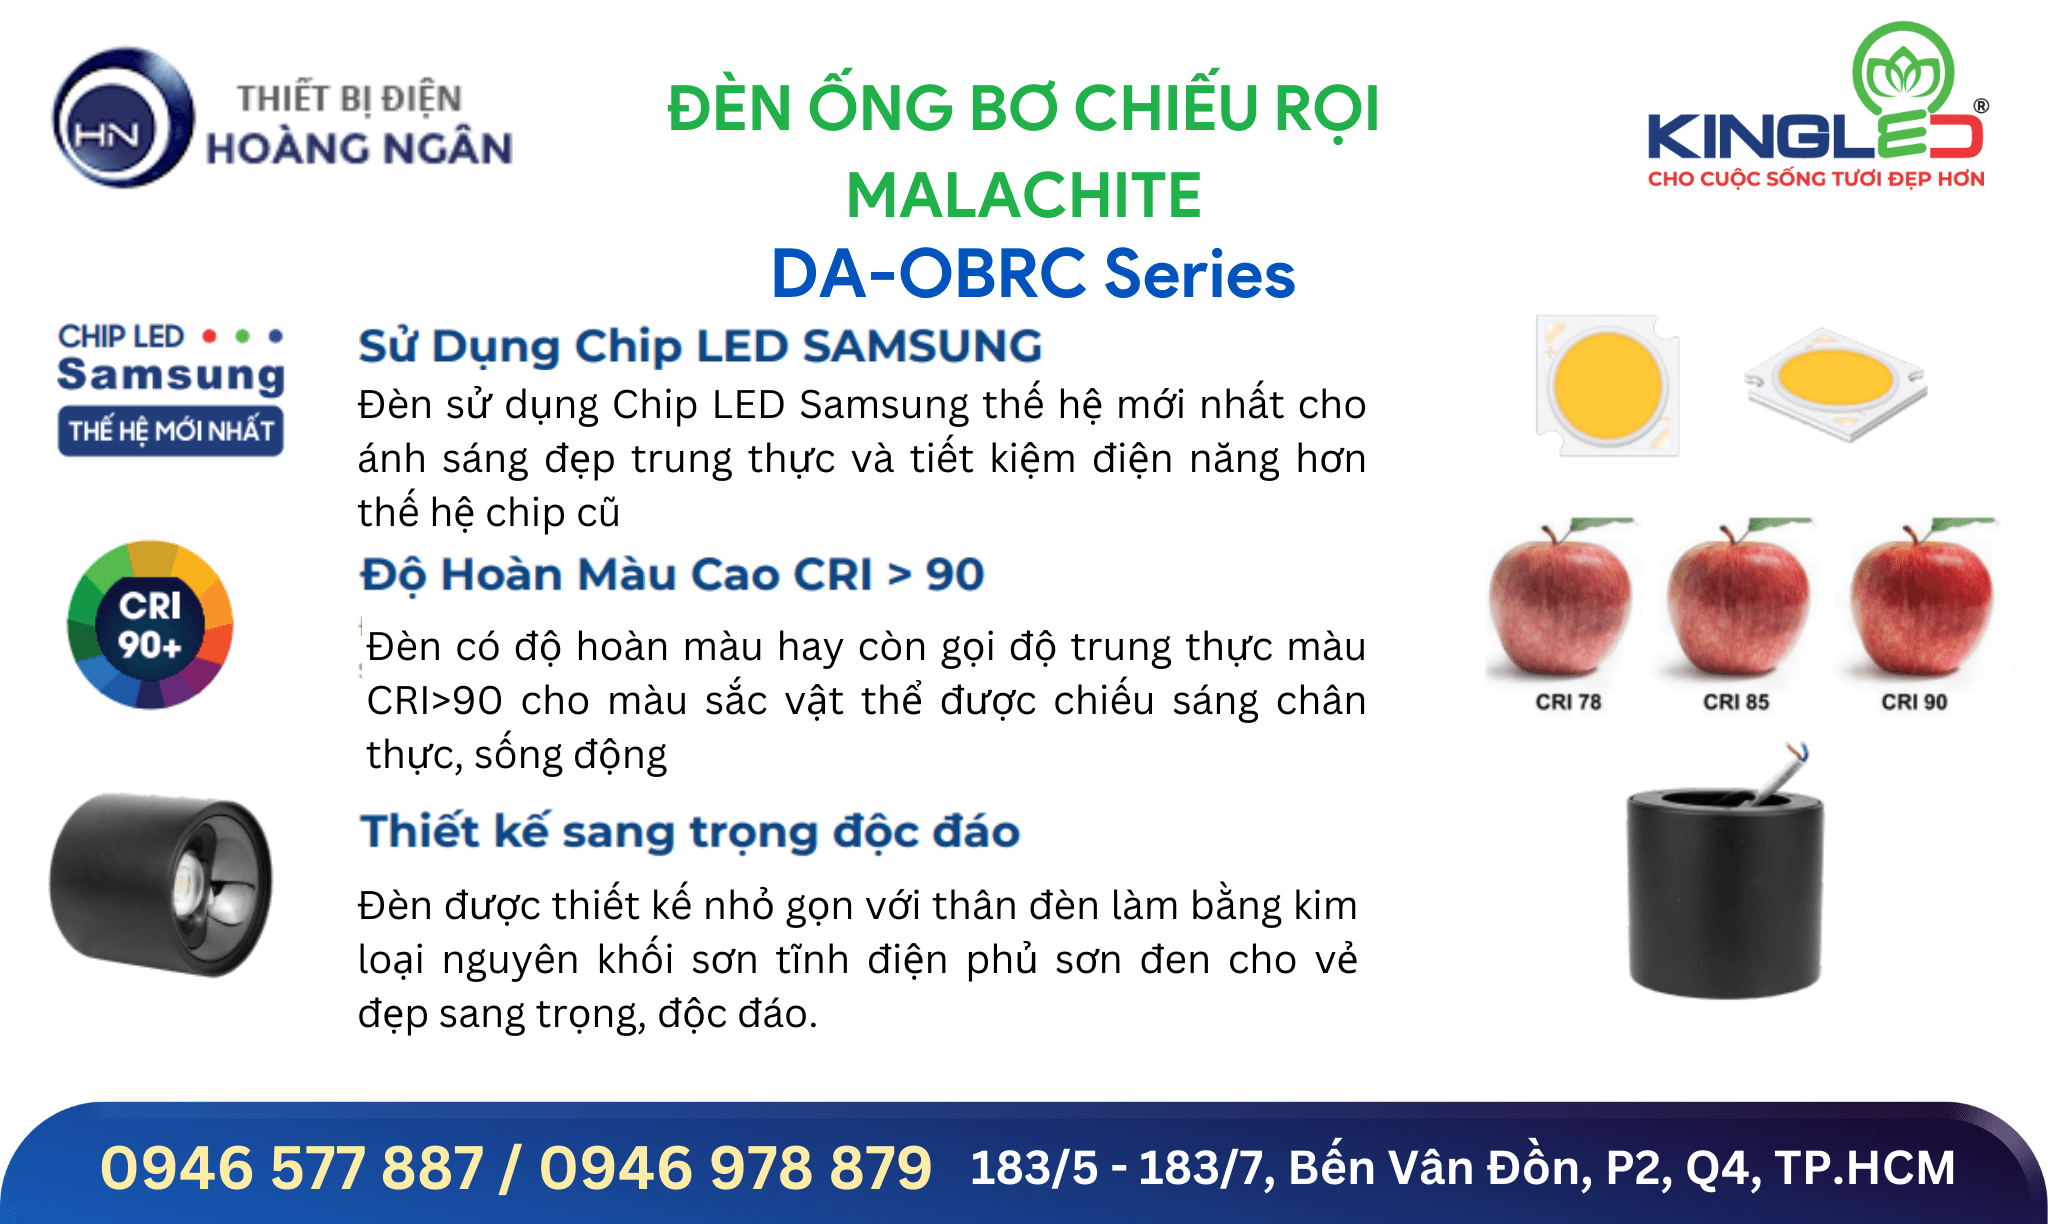 Đèn Ống Bơ Chiếu Rọi Malachite KingLED  DA-OBRC Series